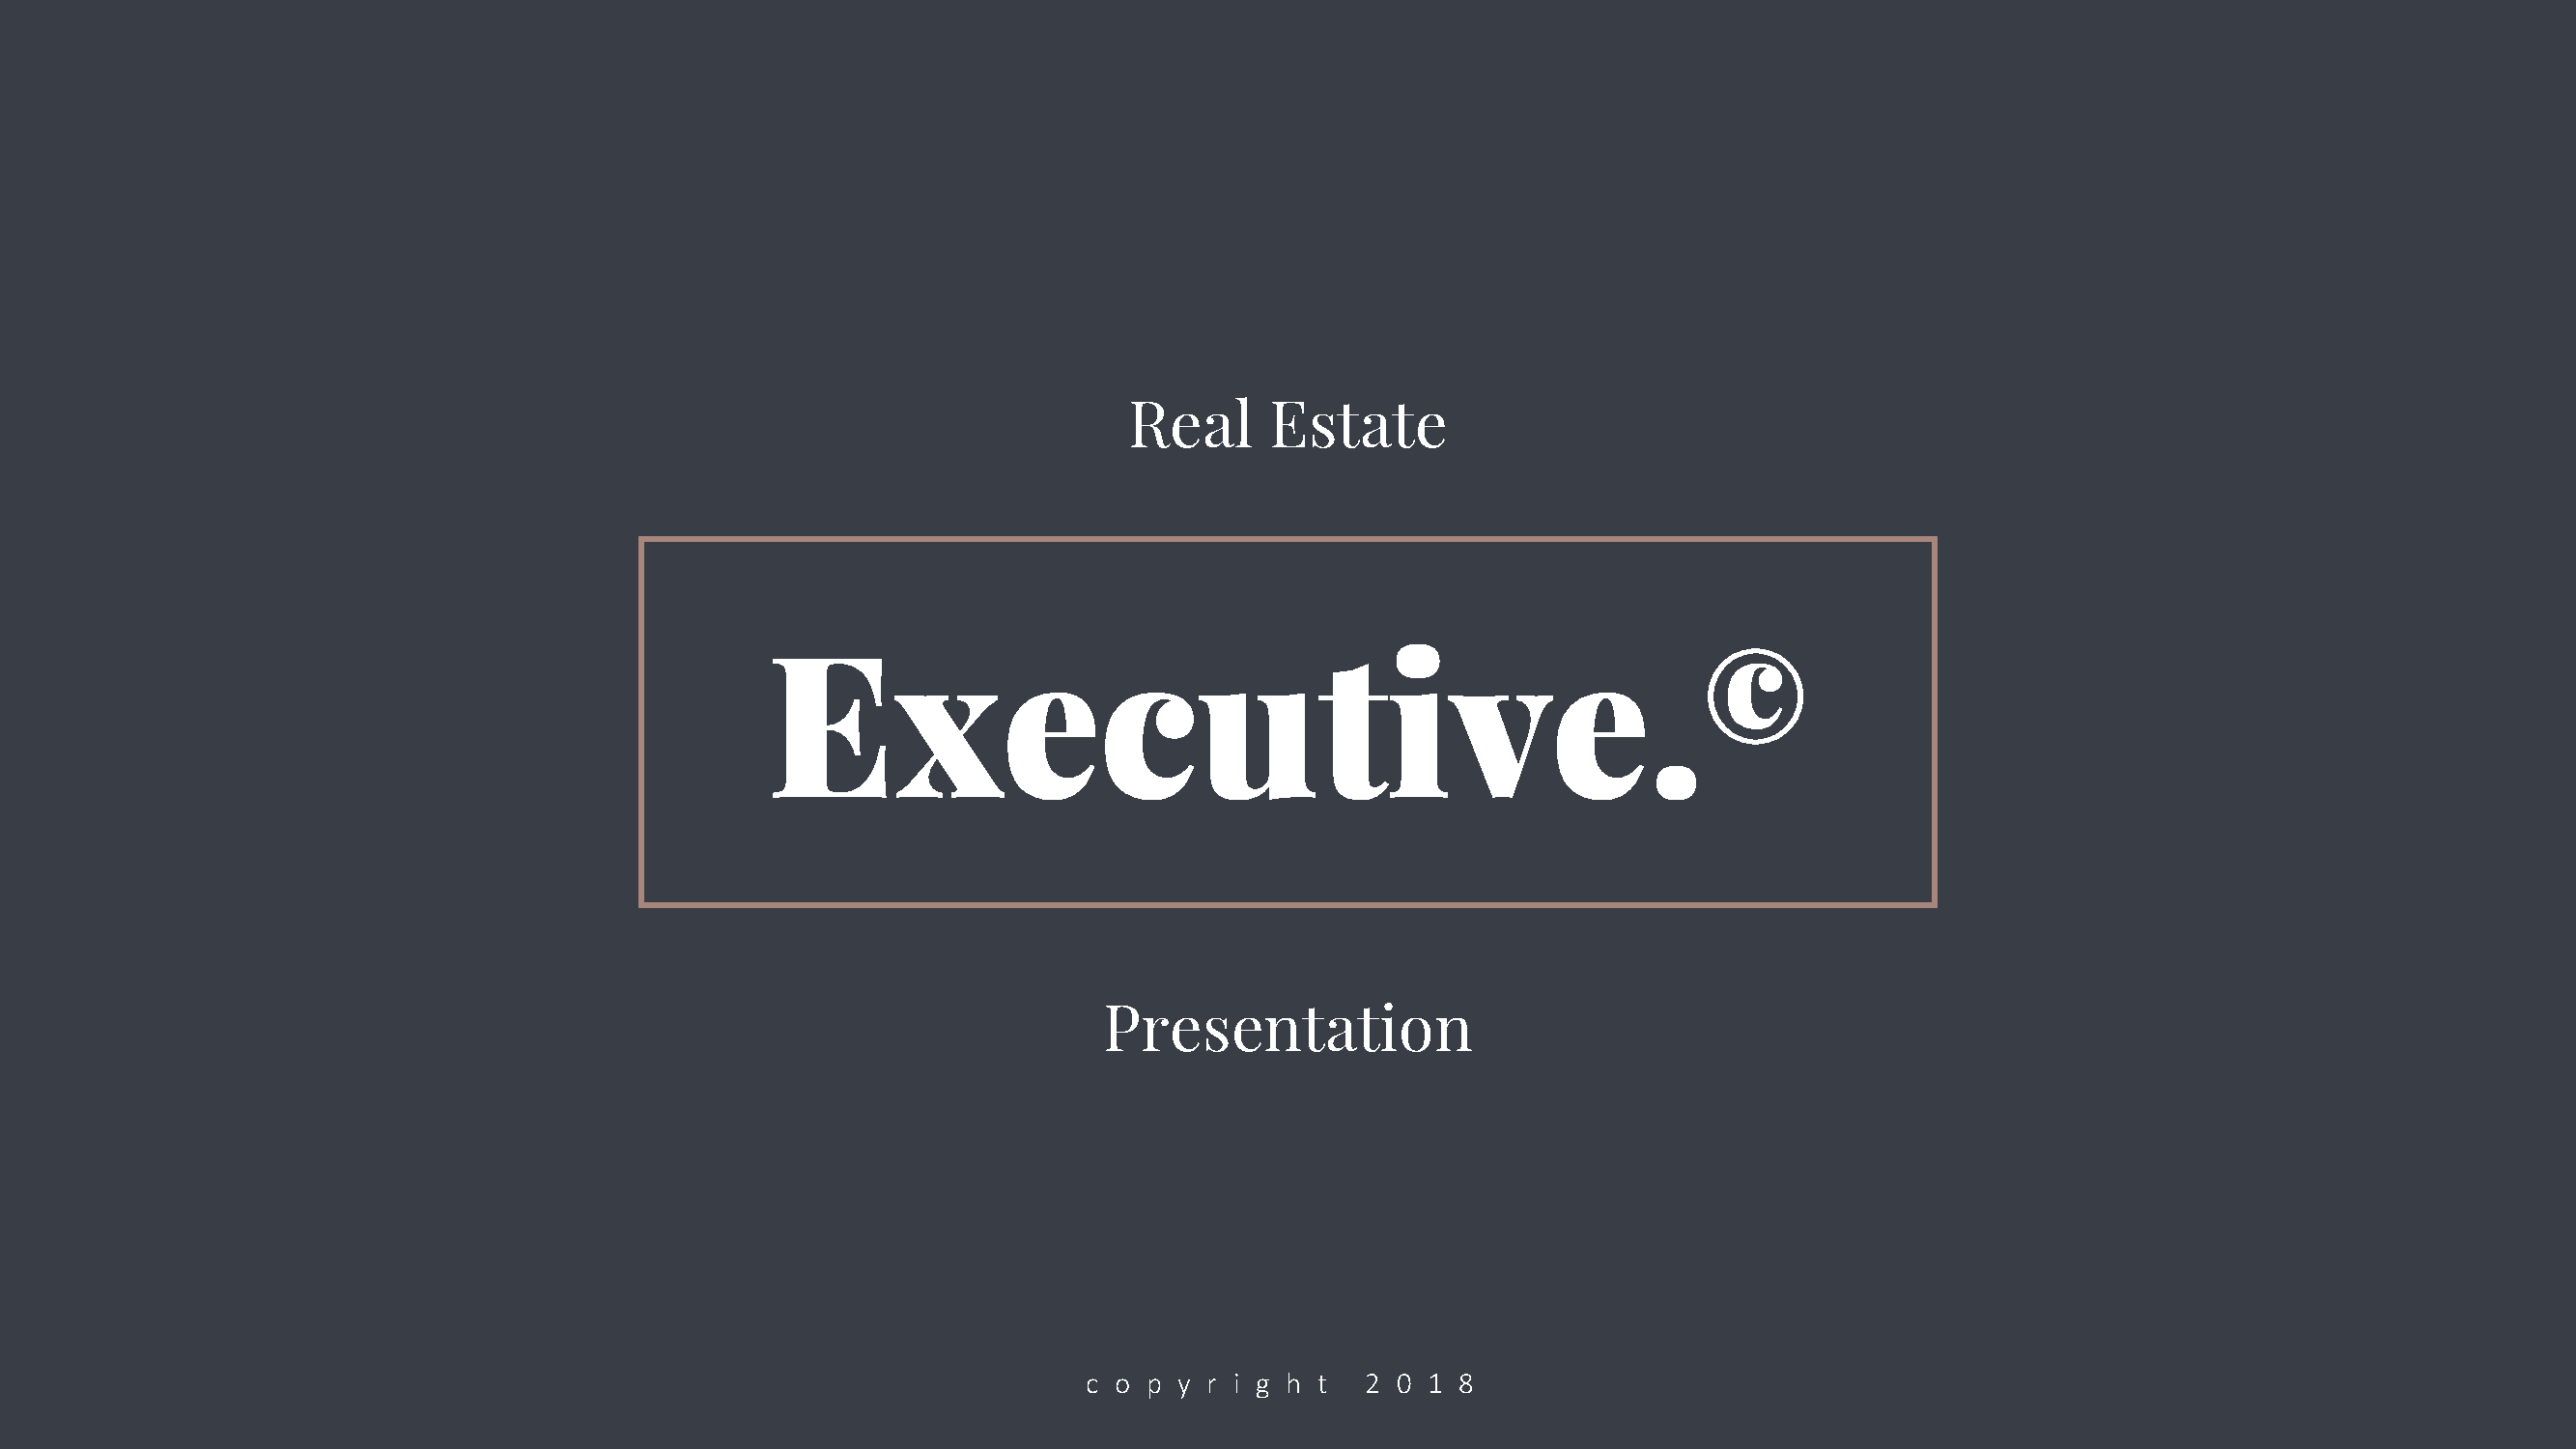 executive-real-estate-presentation-template-92BN36H